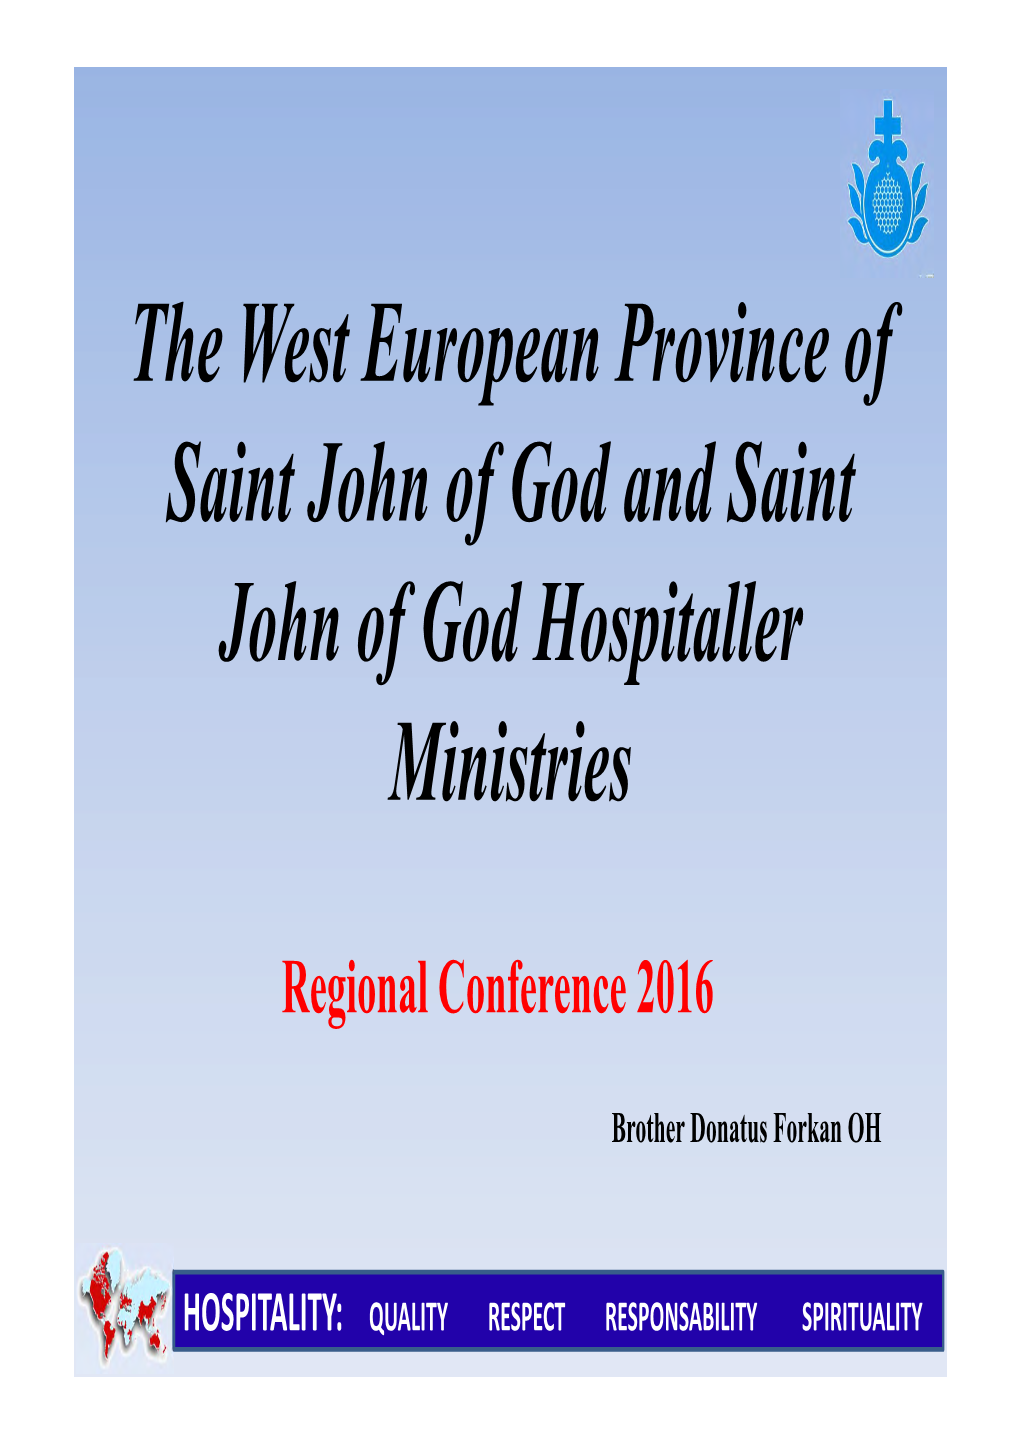 The West European Province of Saint John of God and Saint John of God Hospitaller Ministries